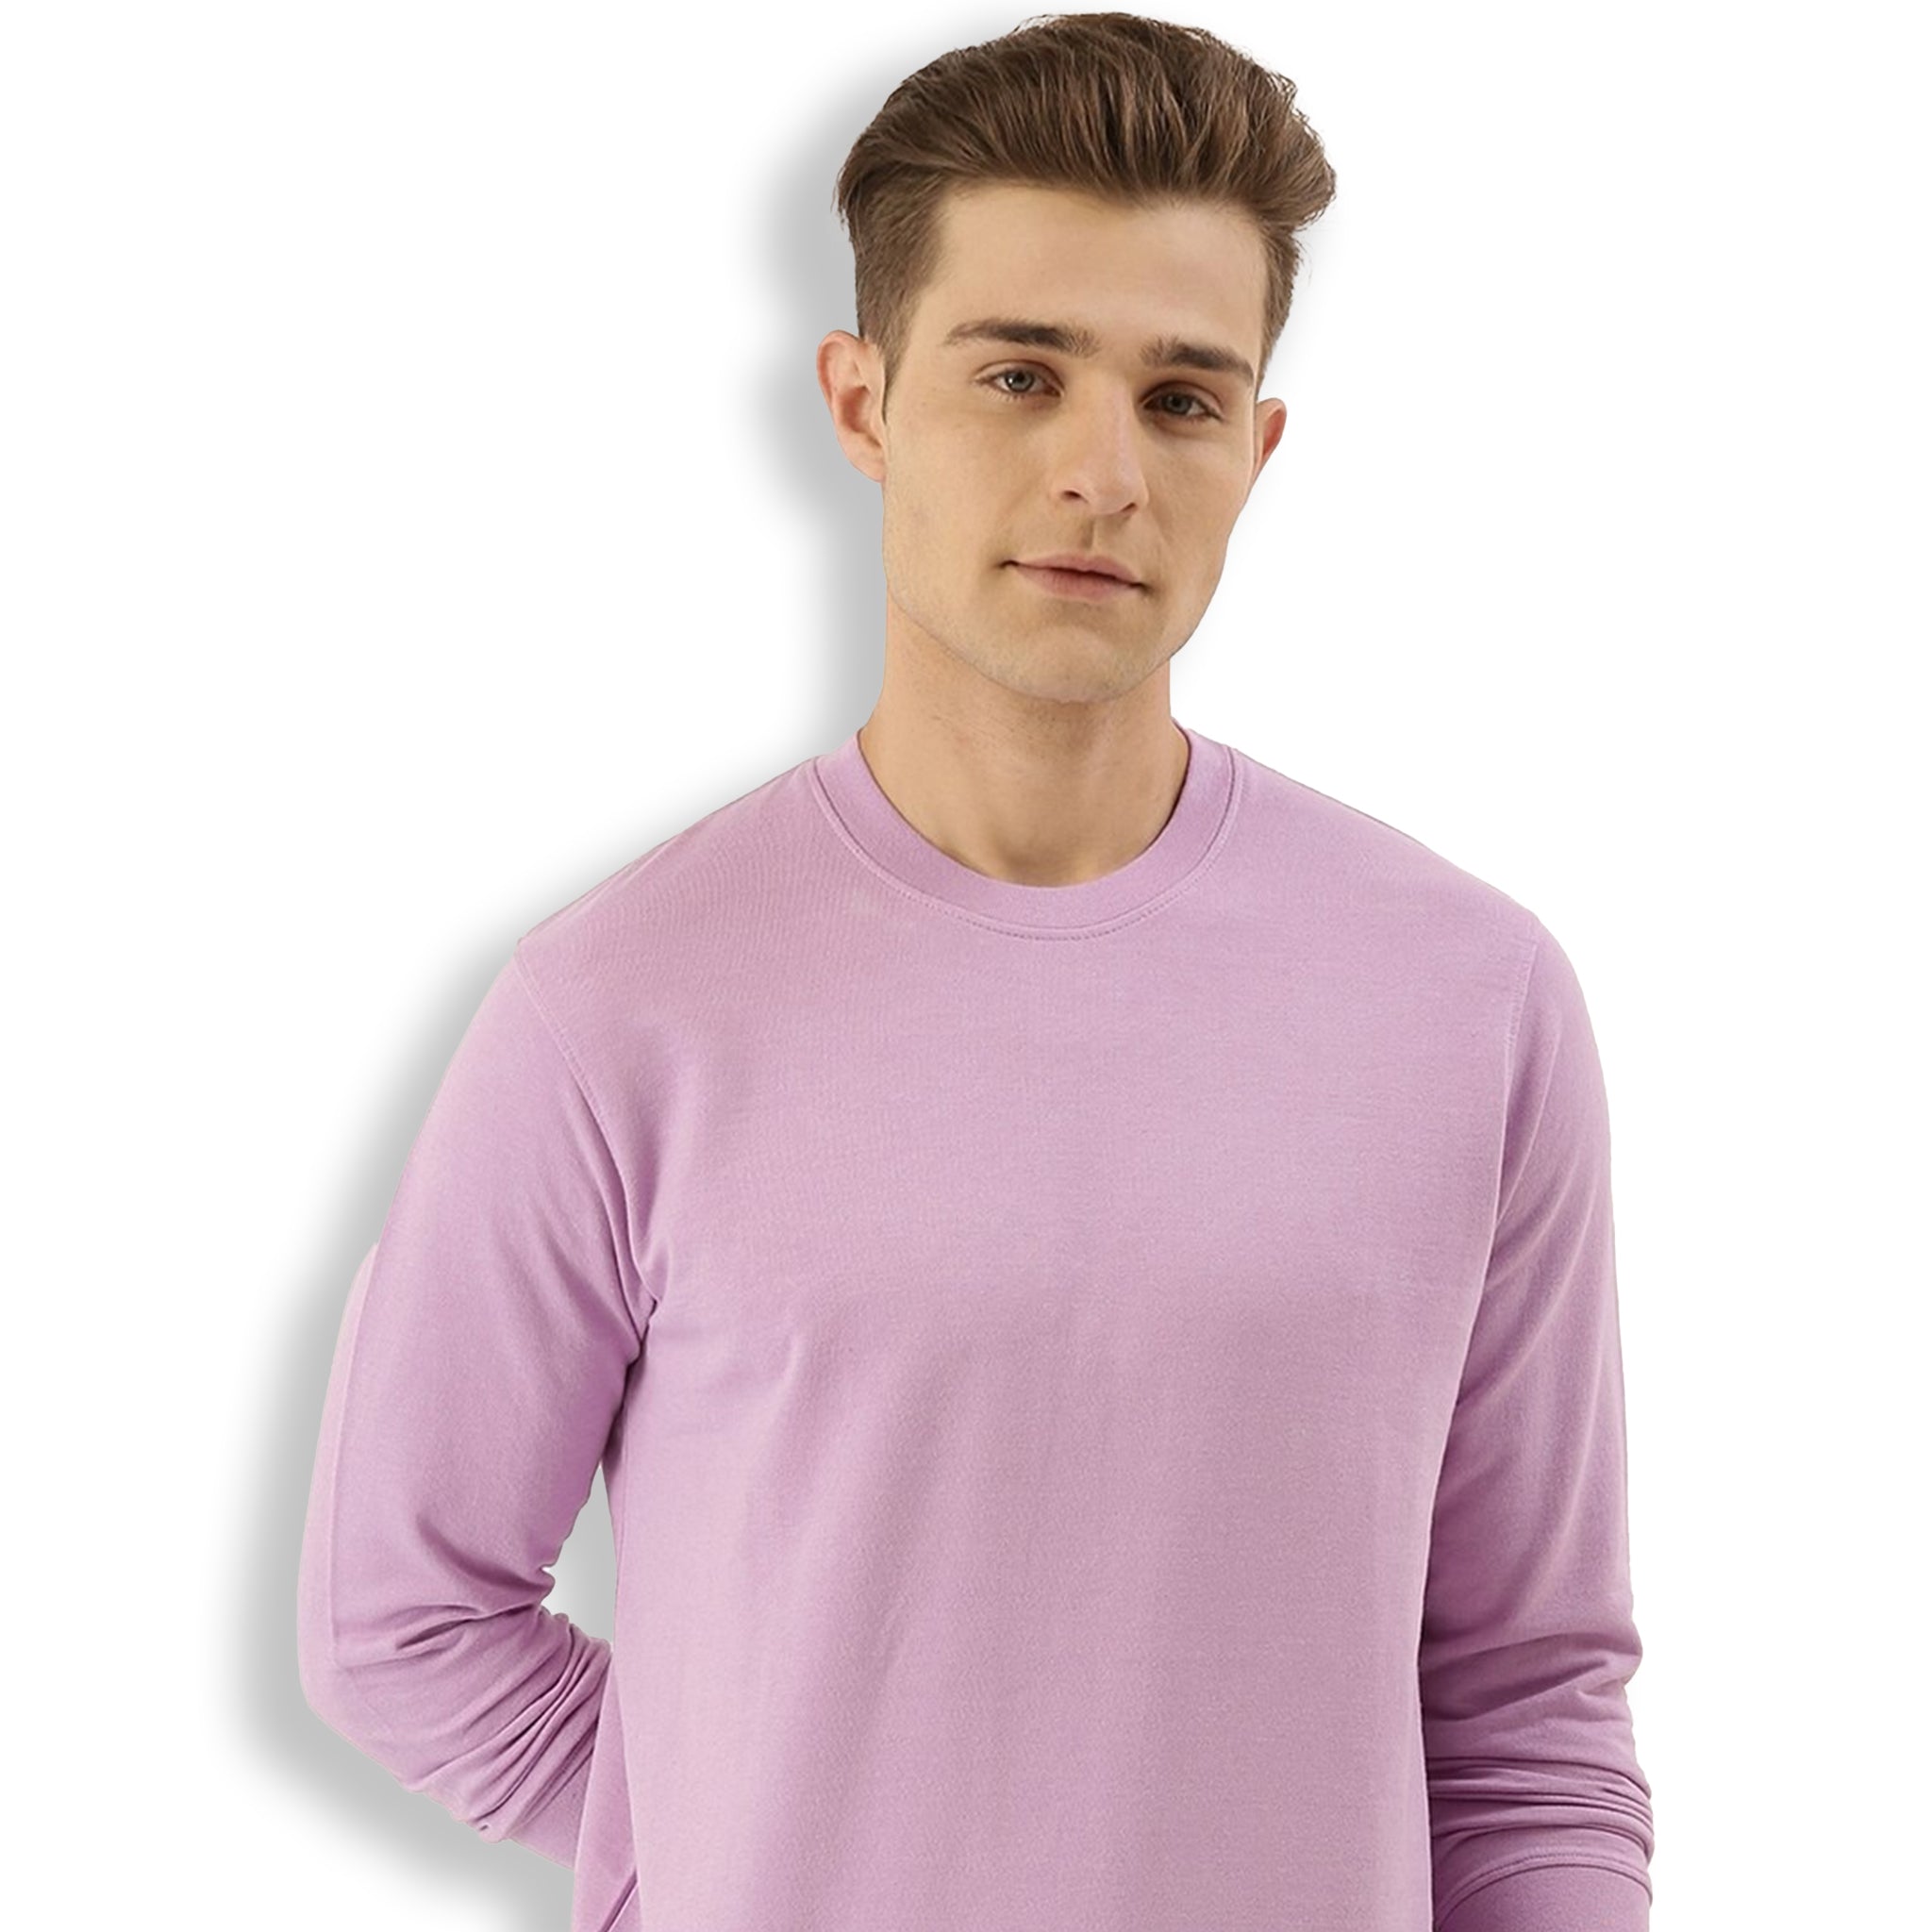 Bizzar's Light Pink Sweatshirt